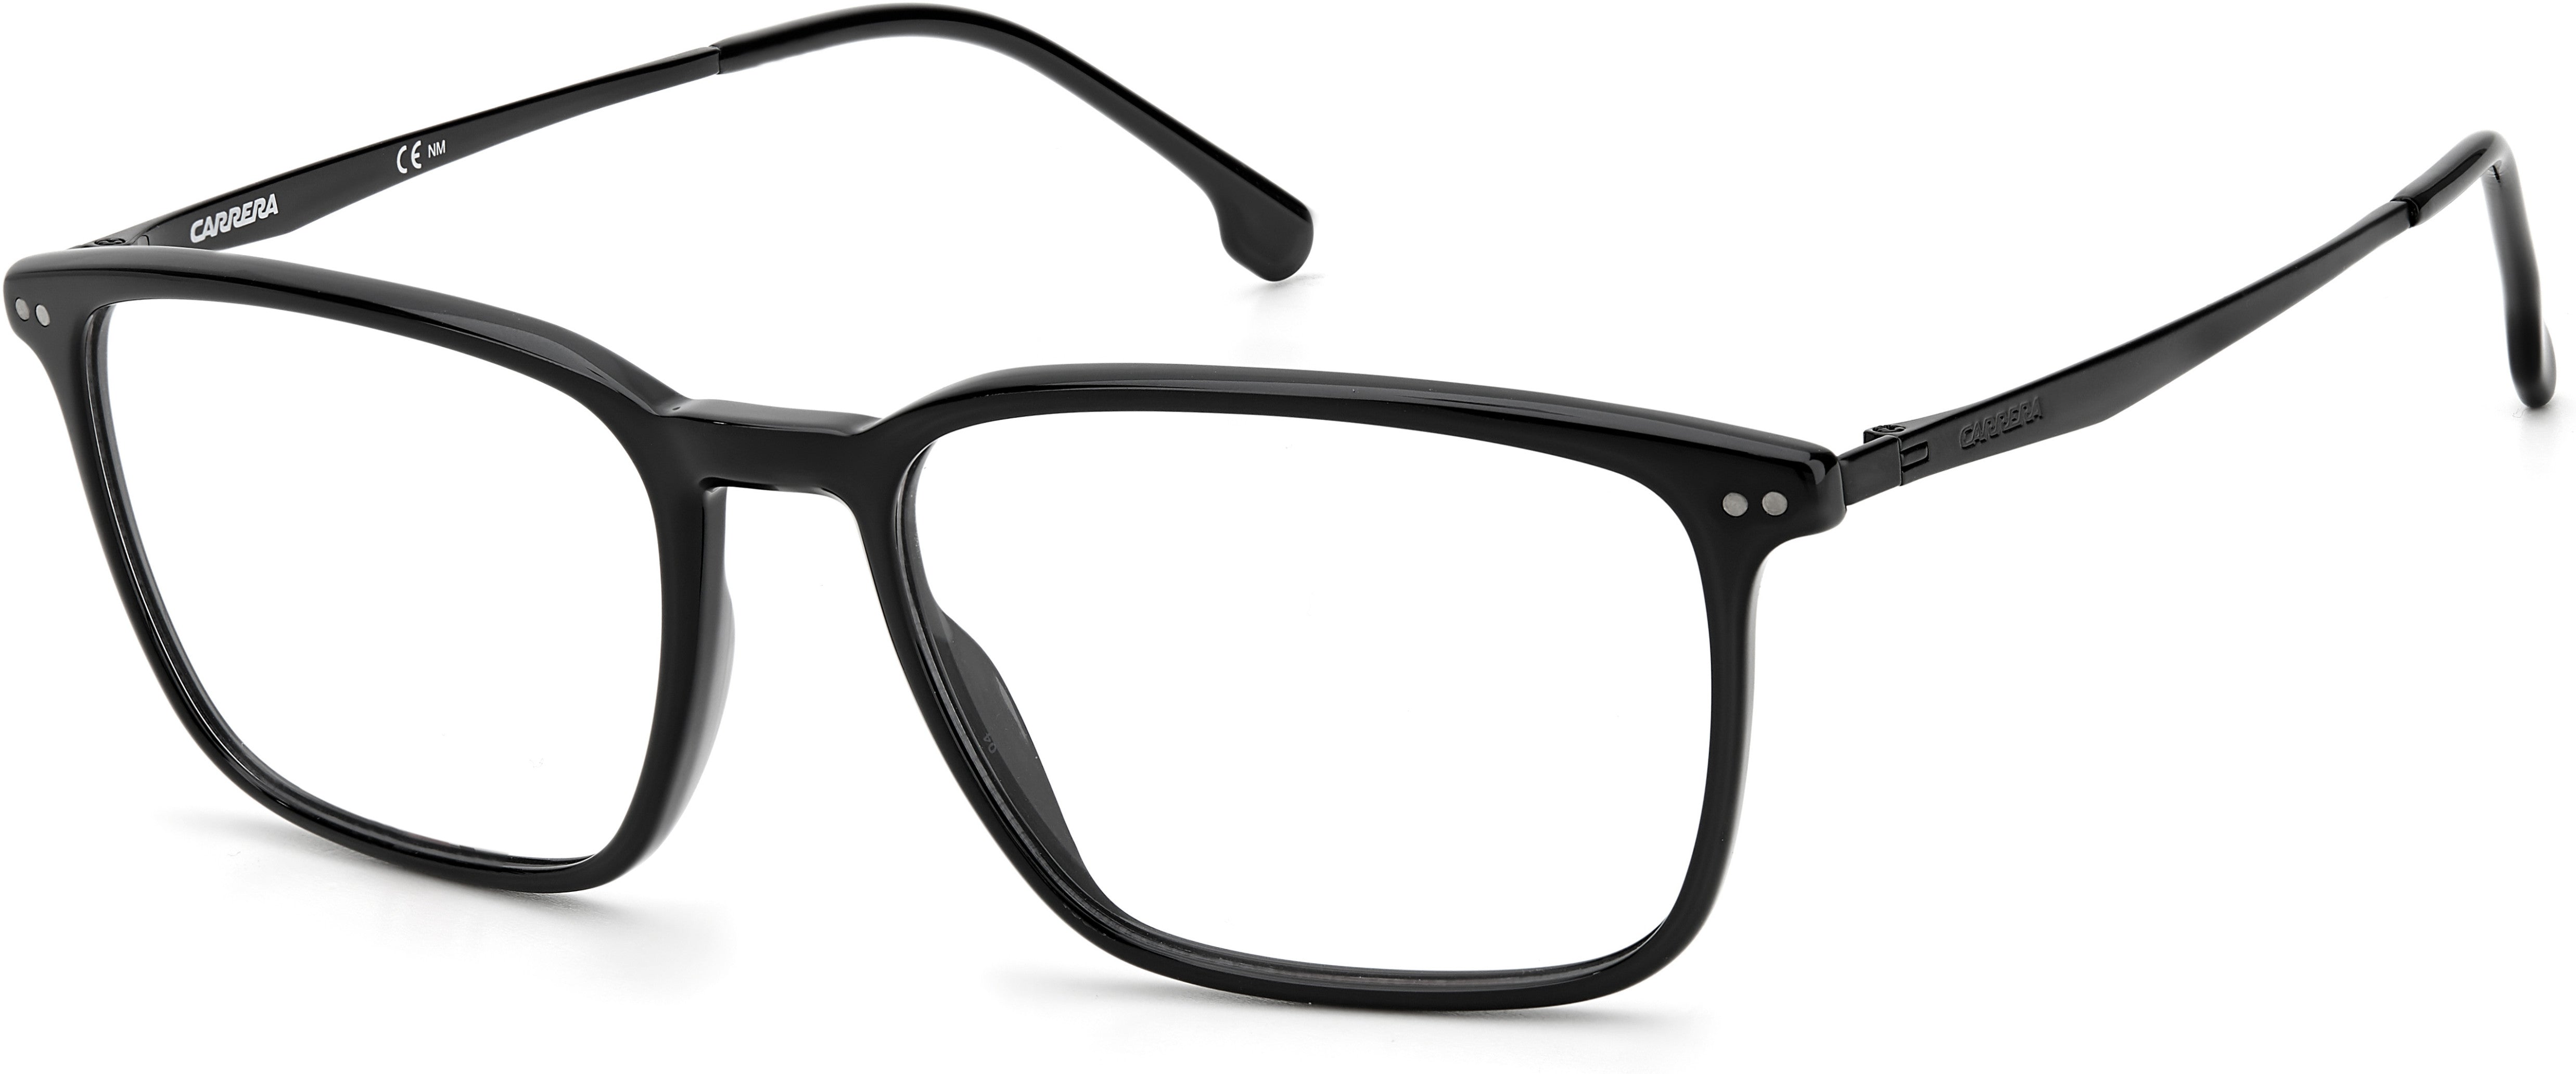  Carrera 8859 Rectangular Eyeglasses 0807-0807  Black (00 Demo Lens)